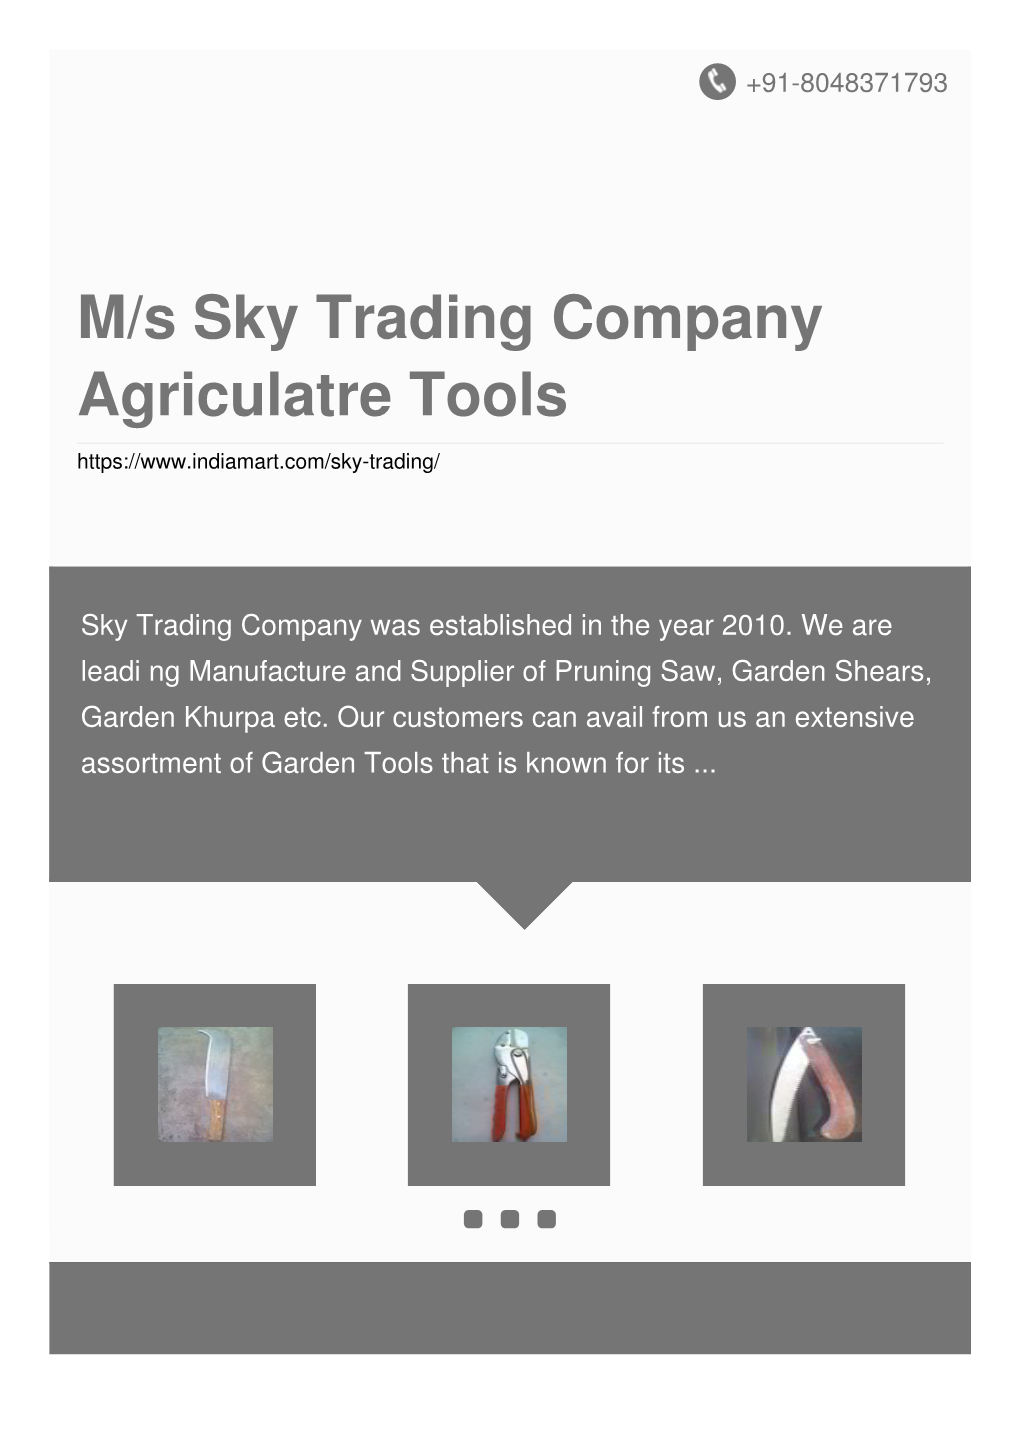 M/S Sky Trading Company Agriculatre Tools